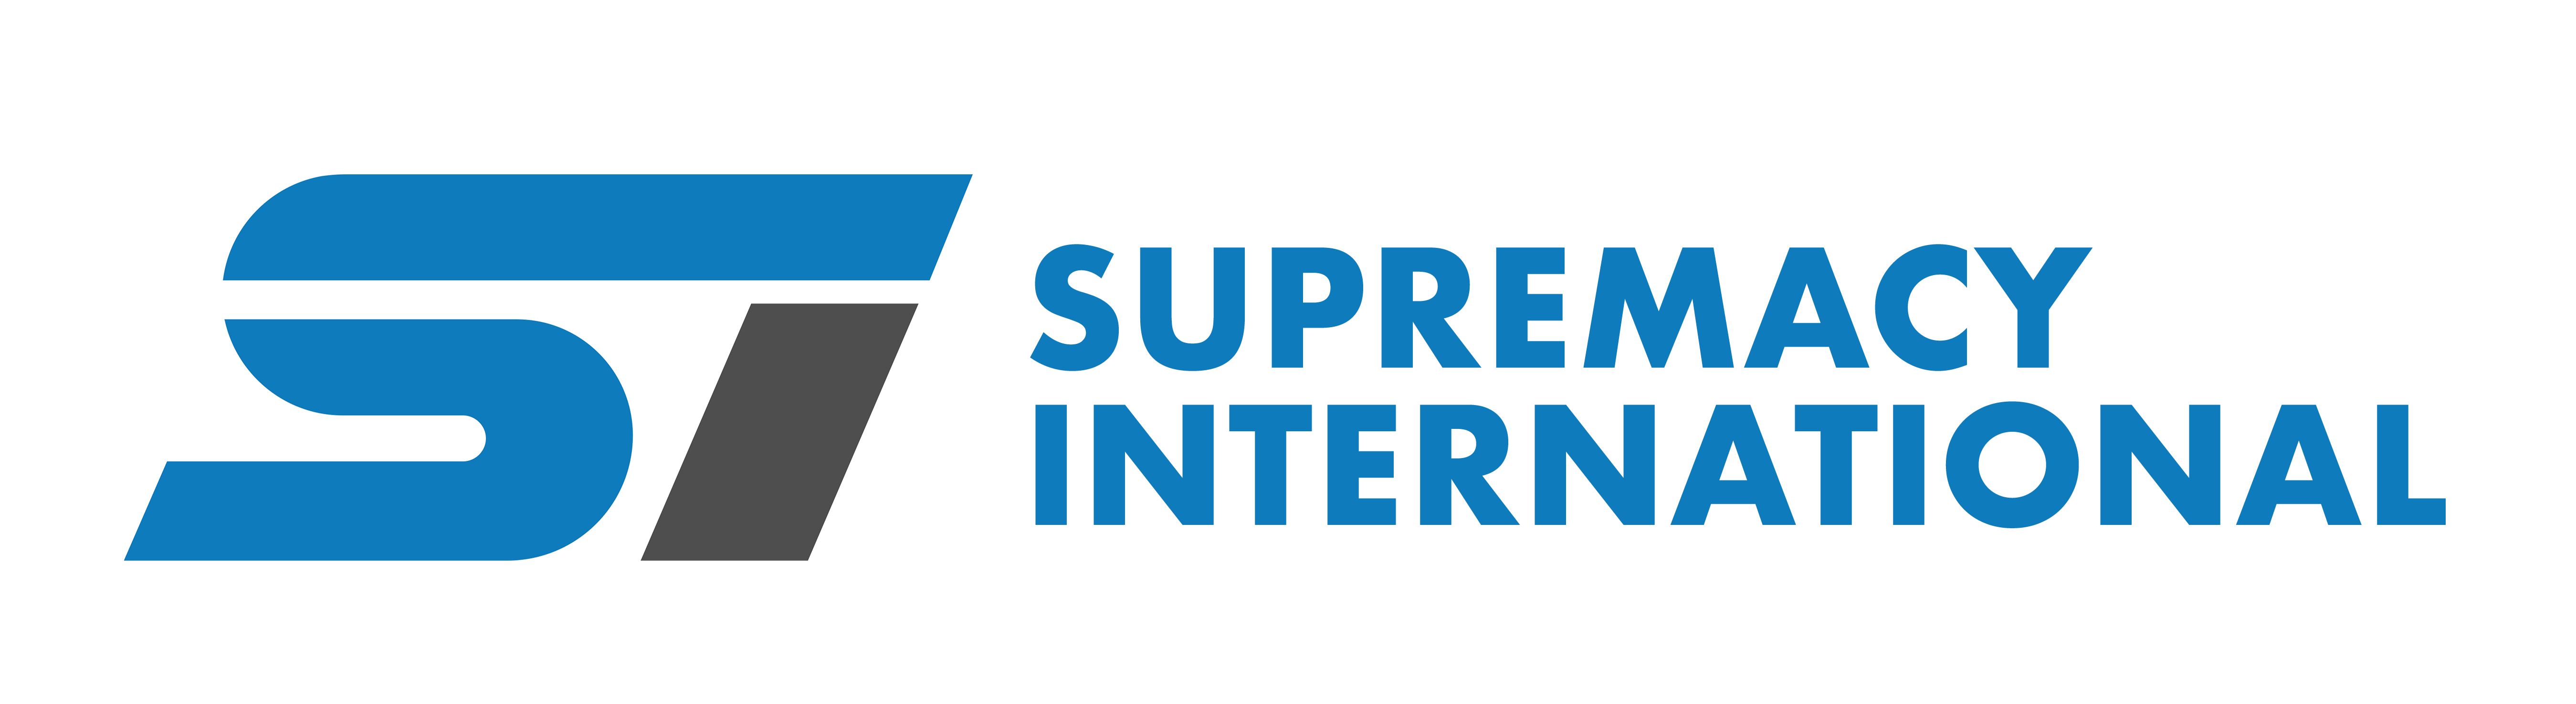 Supremacy International Logo